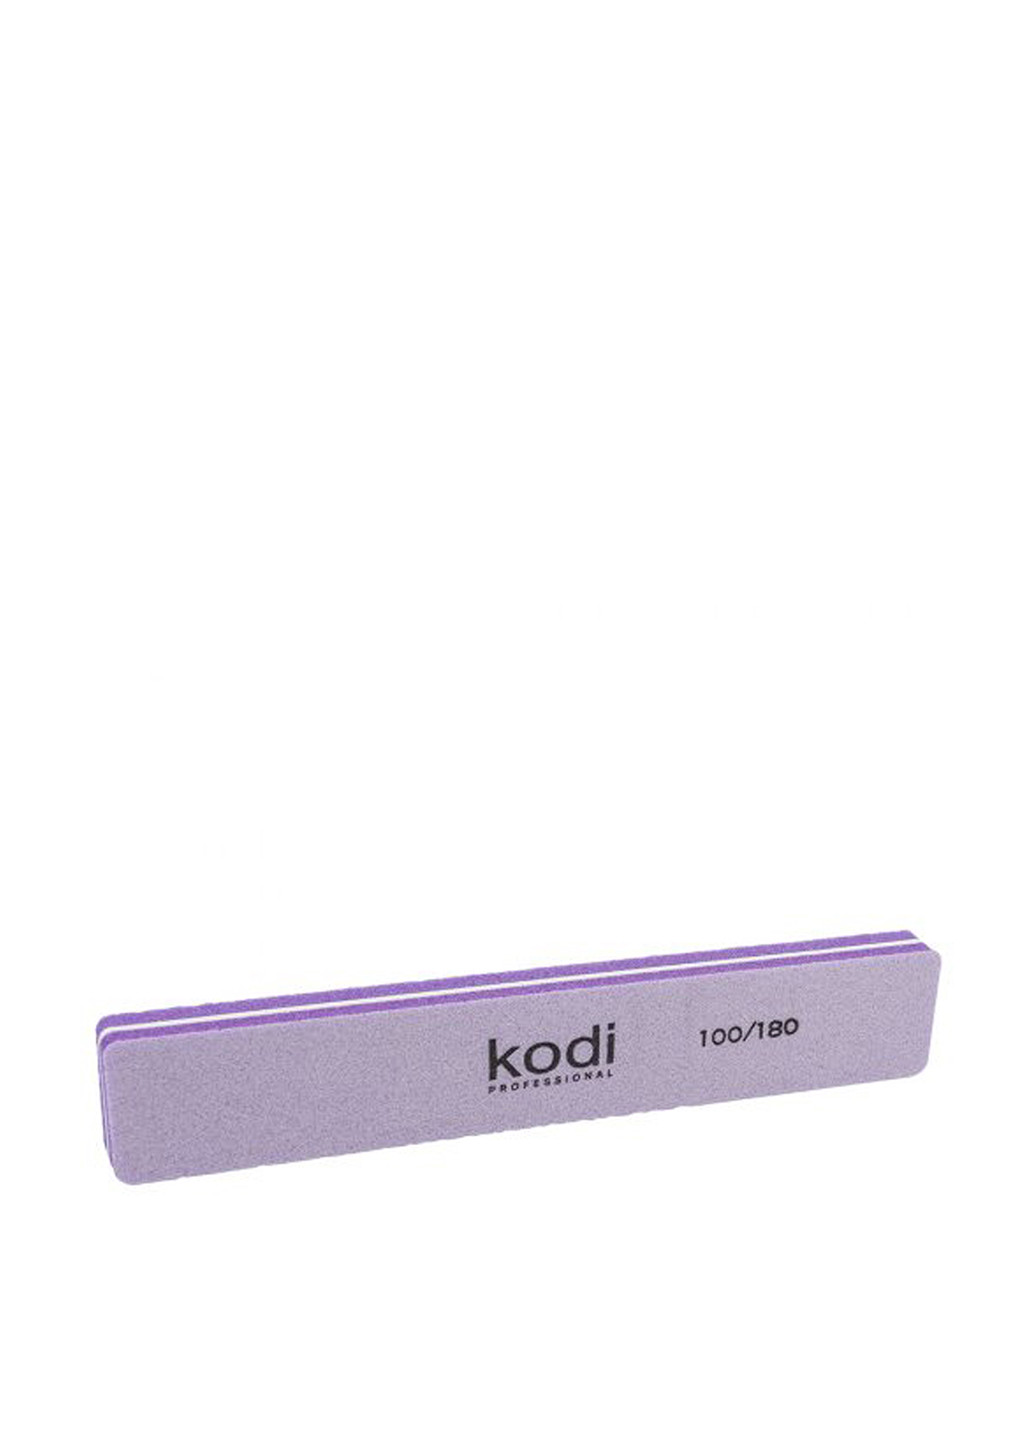 Баф 100/180 Kodi Professional (184345690)